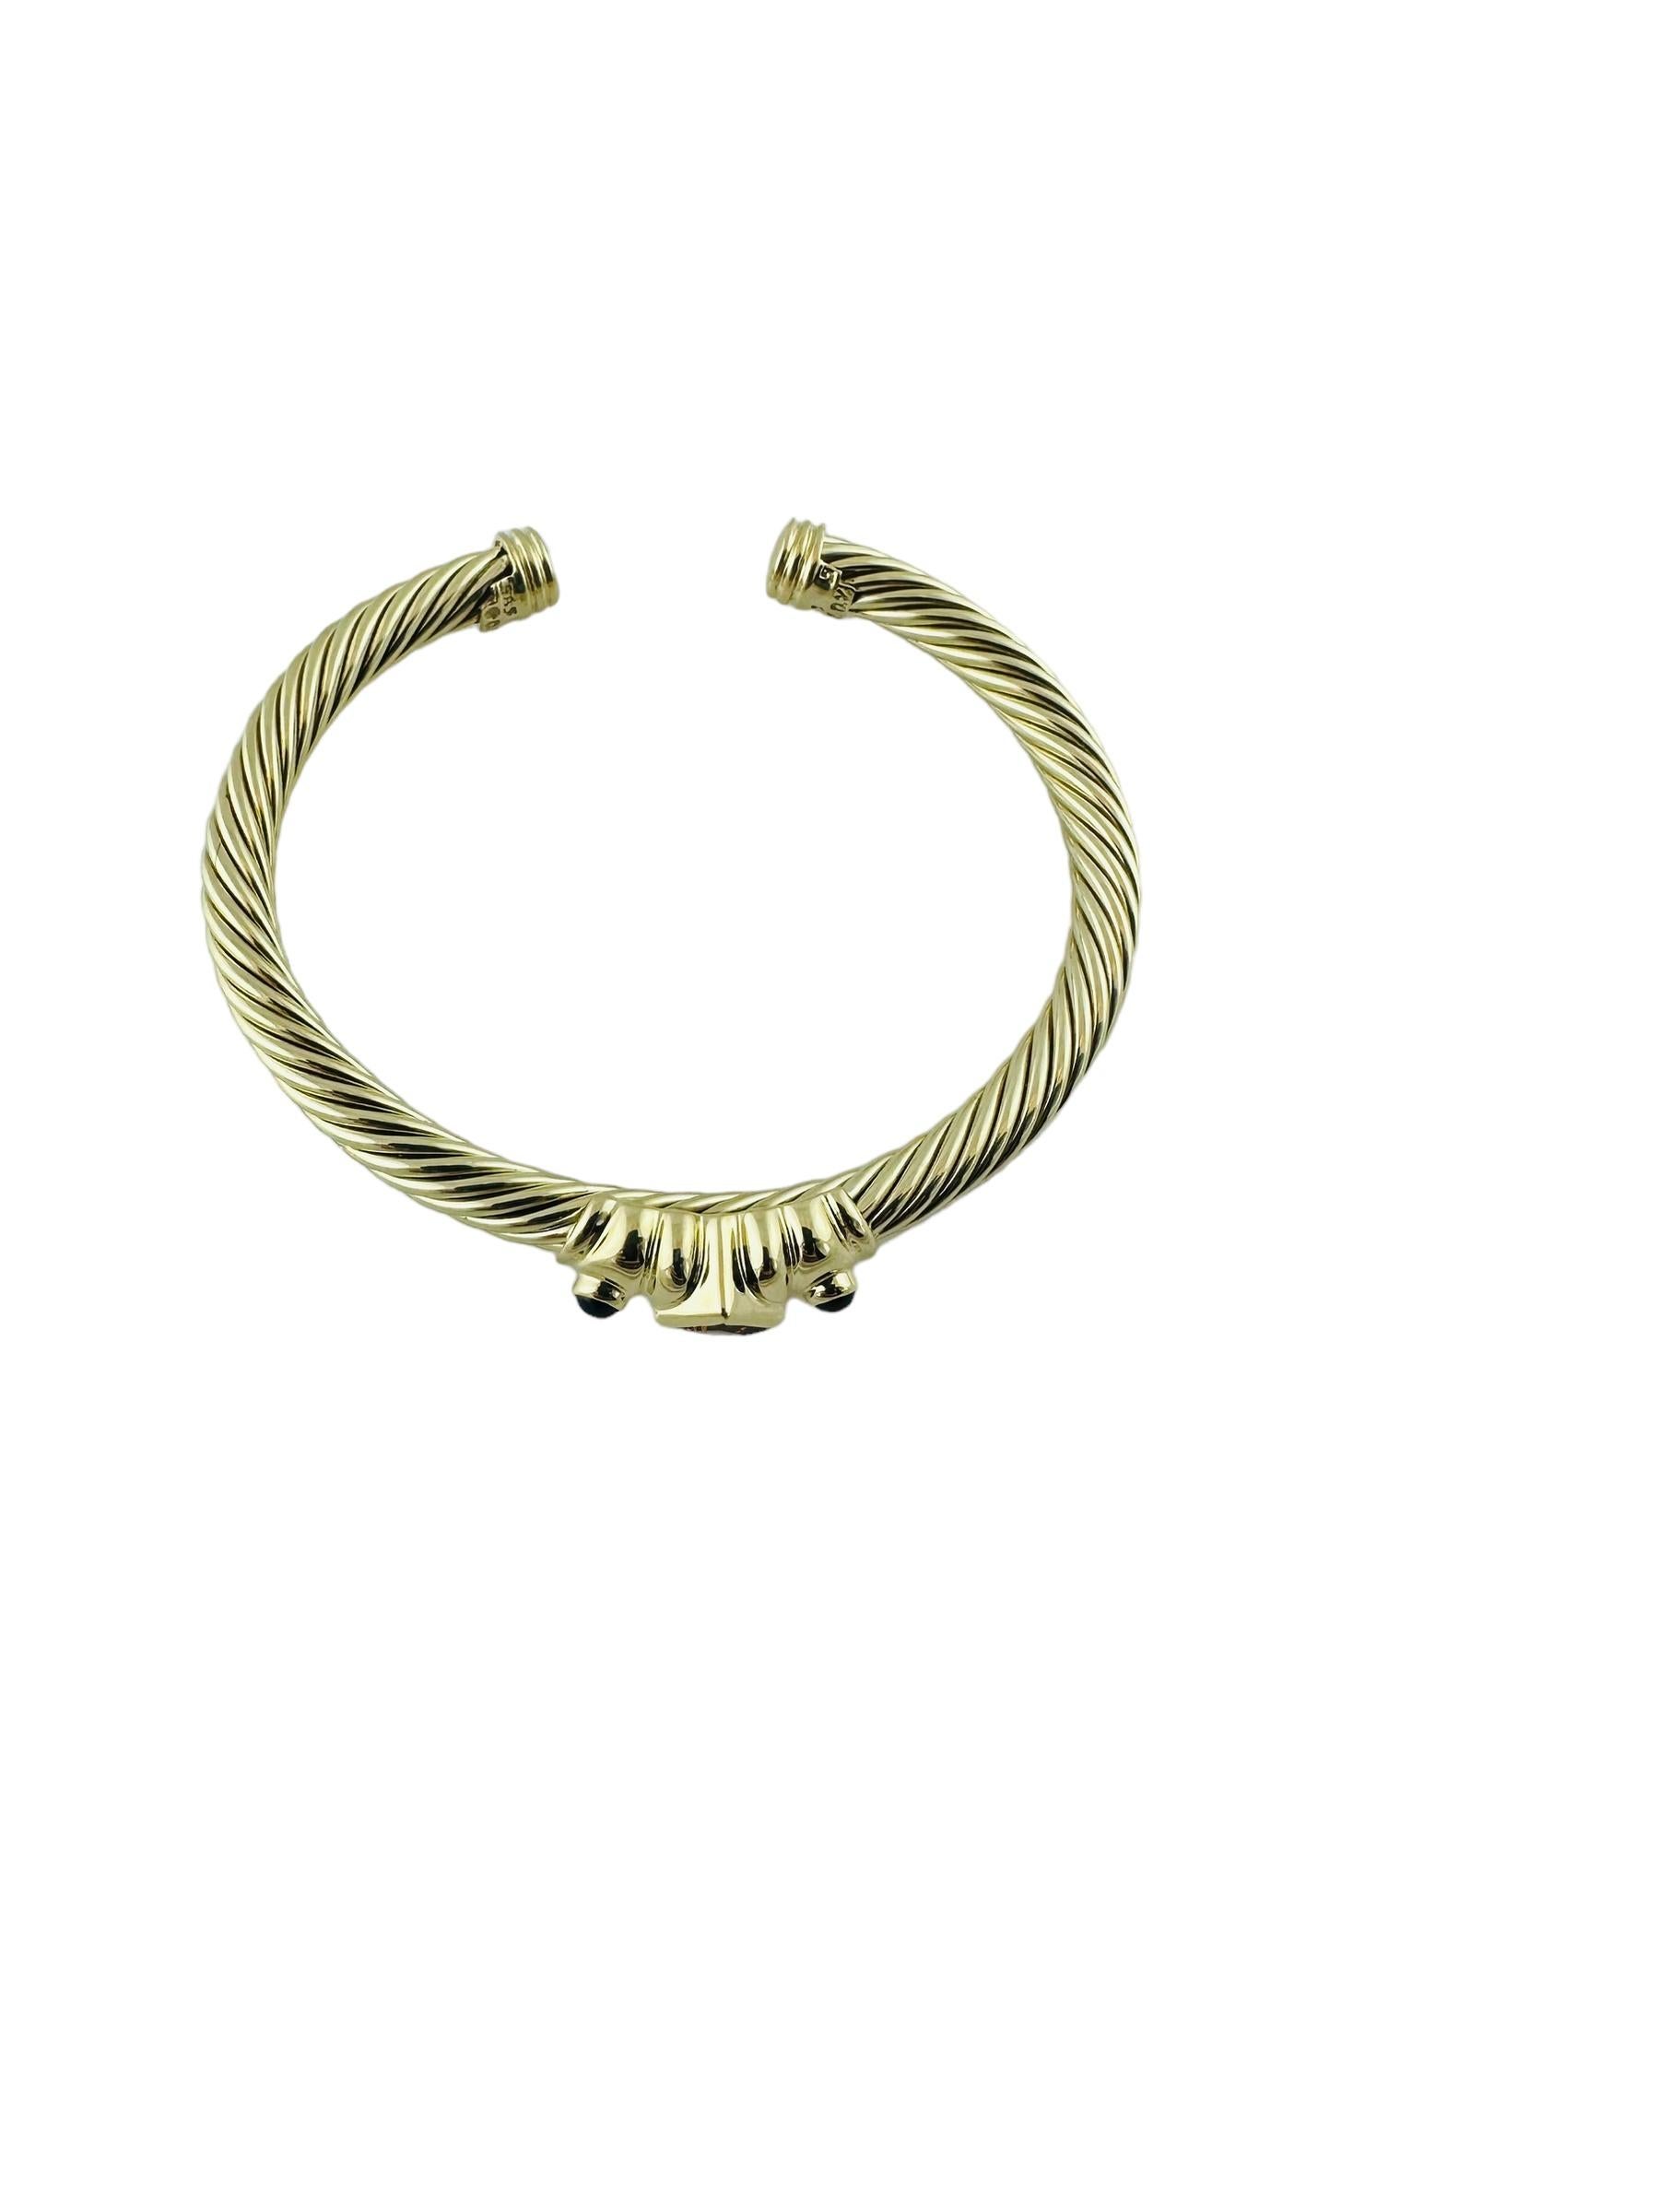 David Yurman Renaissance 14K Yellow Gold Citrine Sapphire Cuff Cable Bracelet For Sale 3